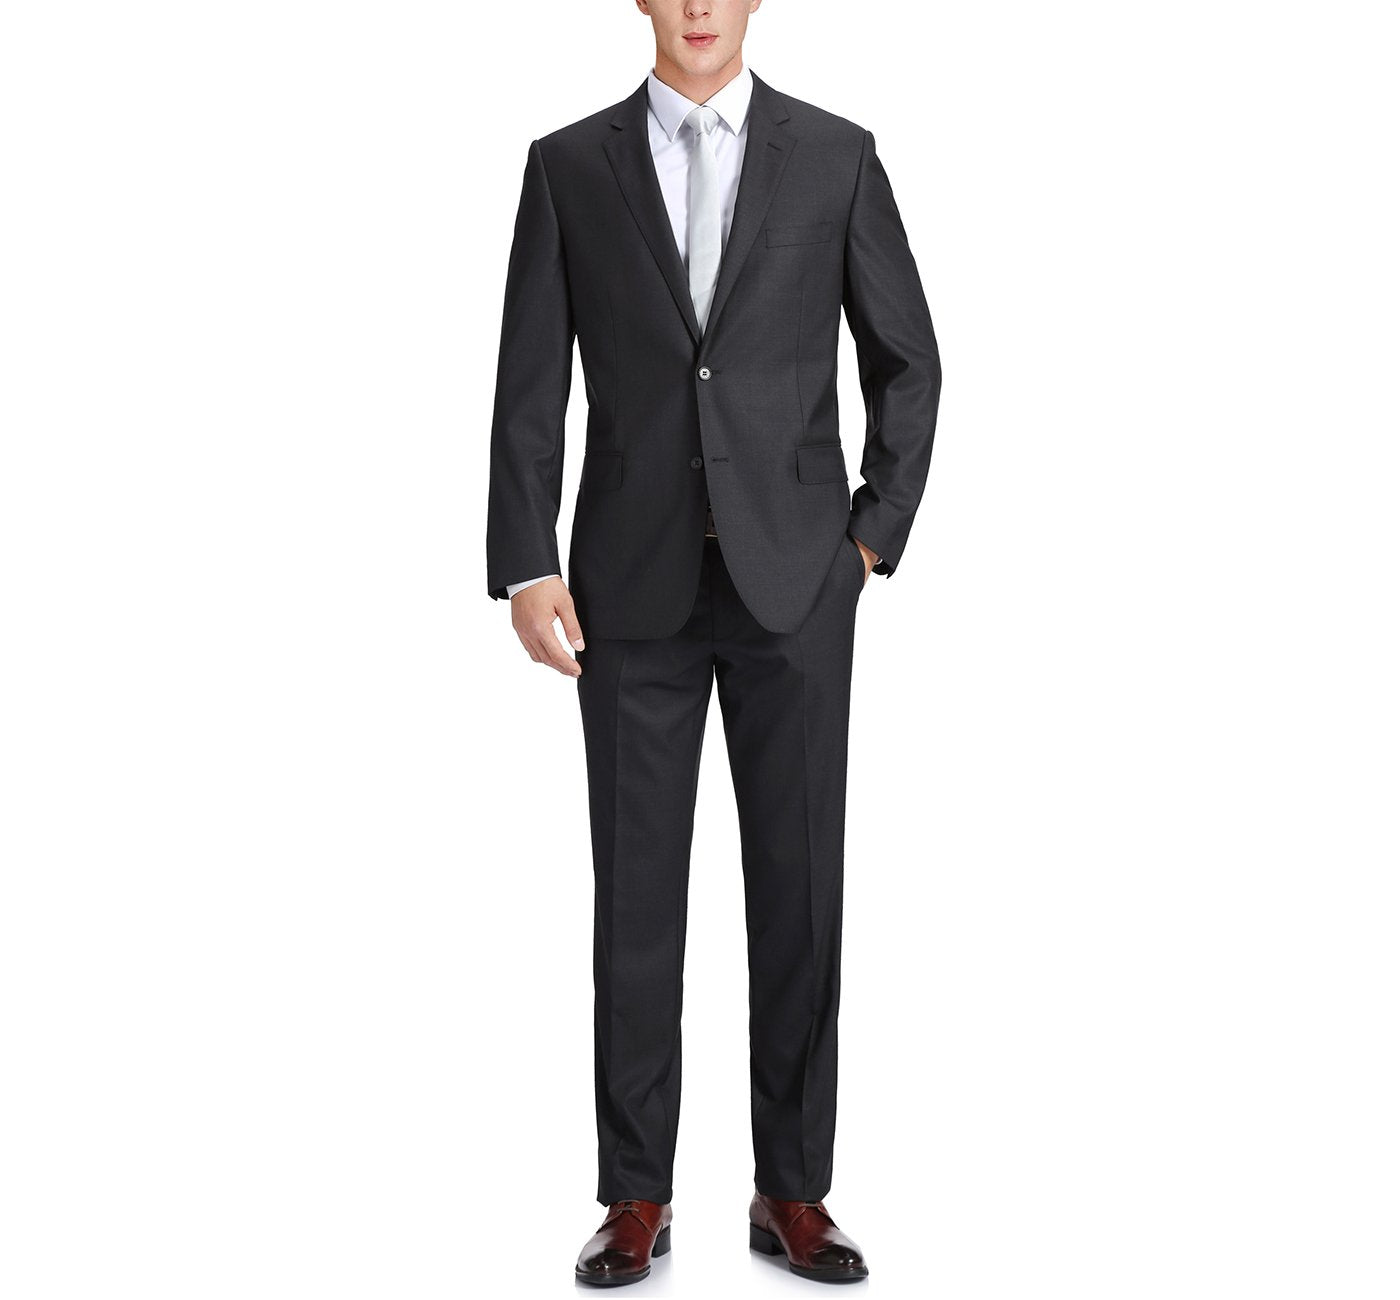 555-3 Men's Dark Grey 2-Piece Notch Lapel 100% Wool Suit